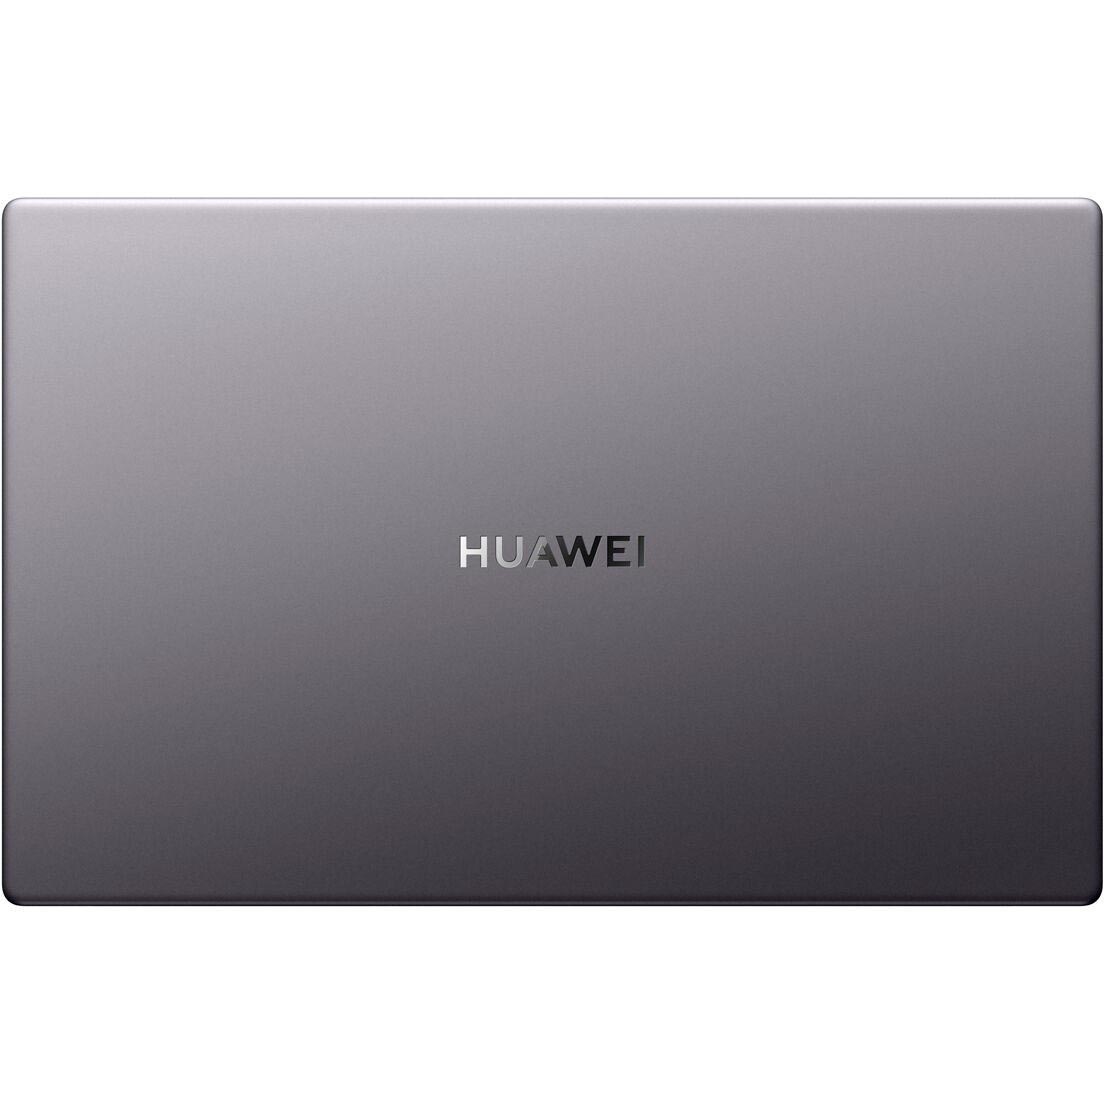 Ноутбук huawei matebook d15 gray. Ноутбук Huawei MATEBOOK d15 bod wdi9. Ноутбук ASUS x540ma-gq035. Ноутбук Huawei MATEBOOK D 14 NBM-wdq9 8+512gb Space Grey. Ультрабук Huawei MATEBOOK D 14.